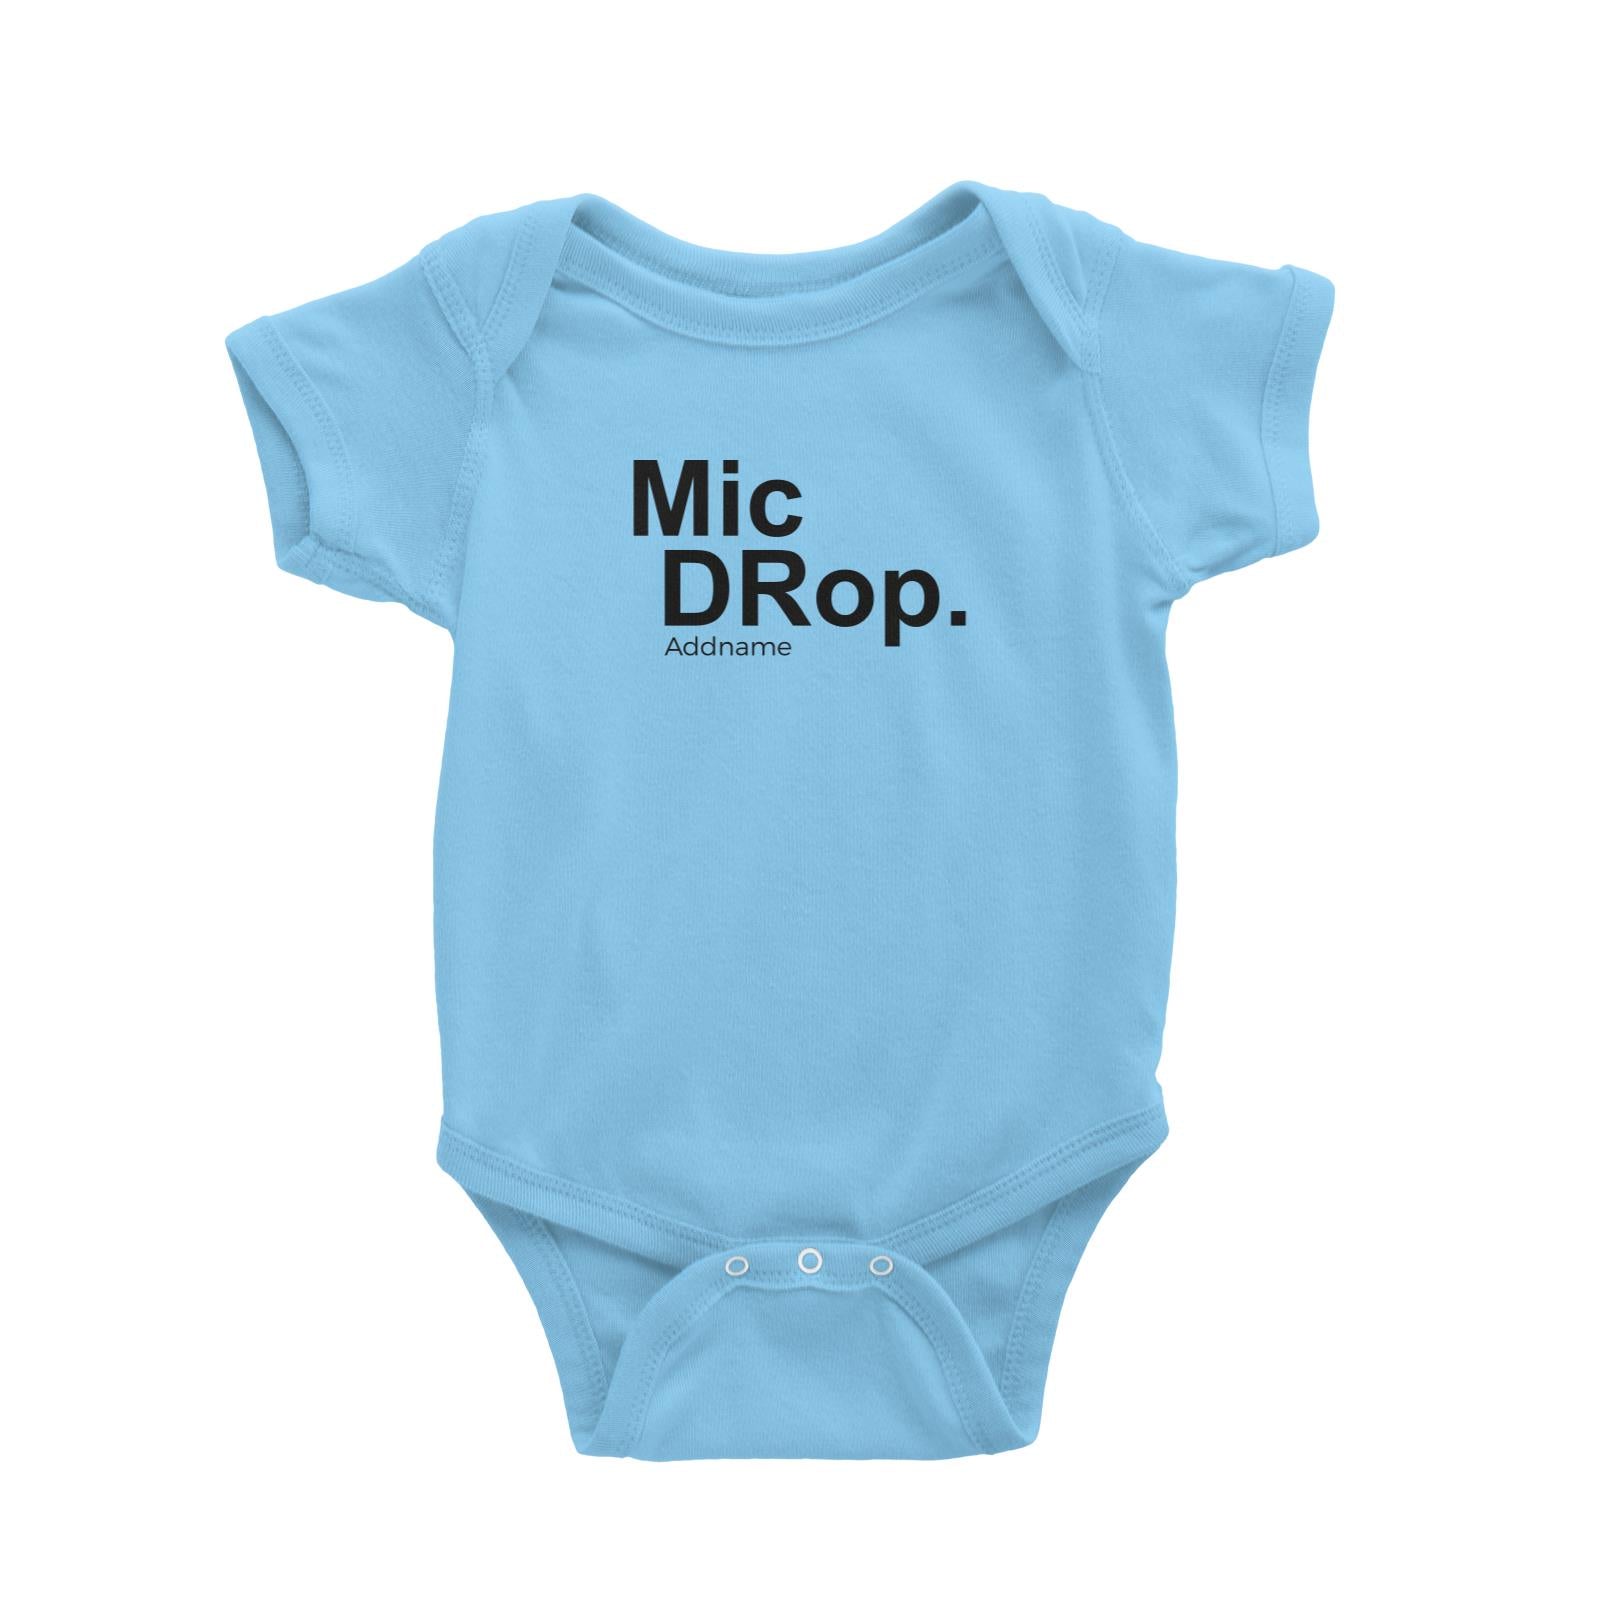 Mic Drop Baby Romper